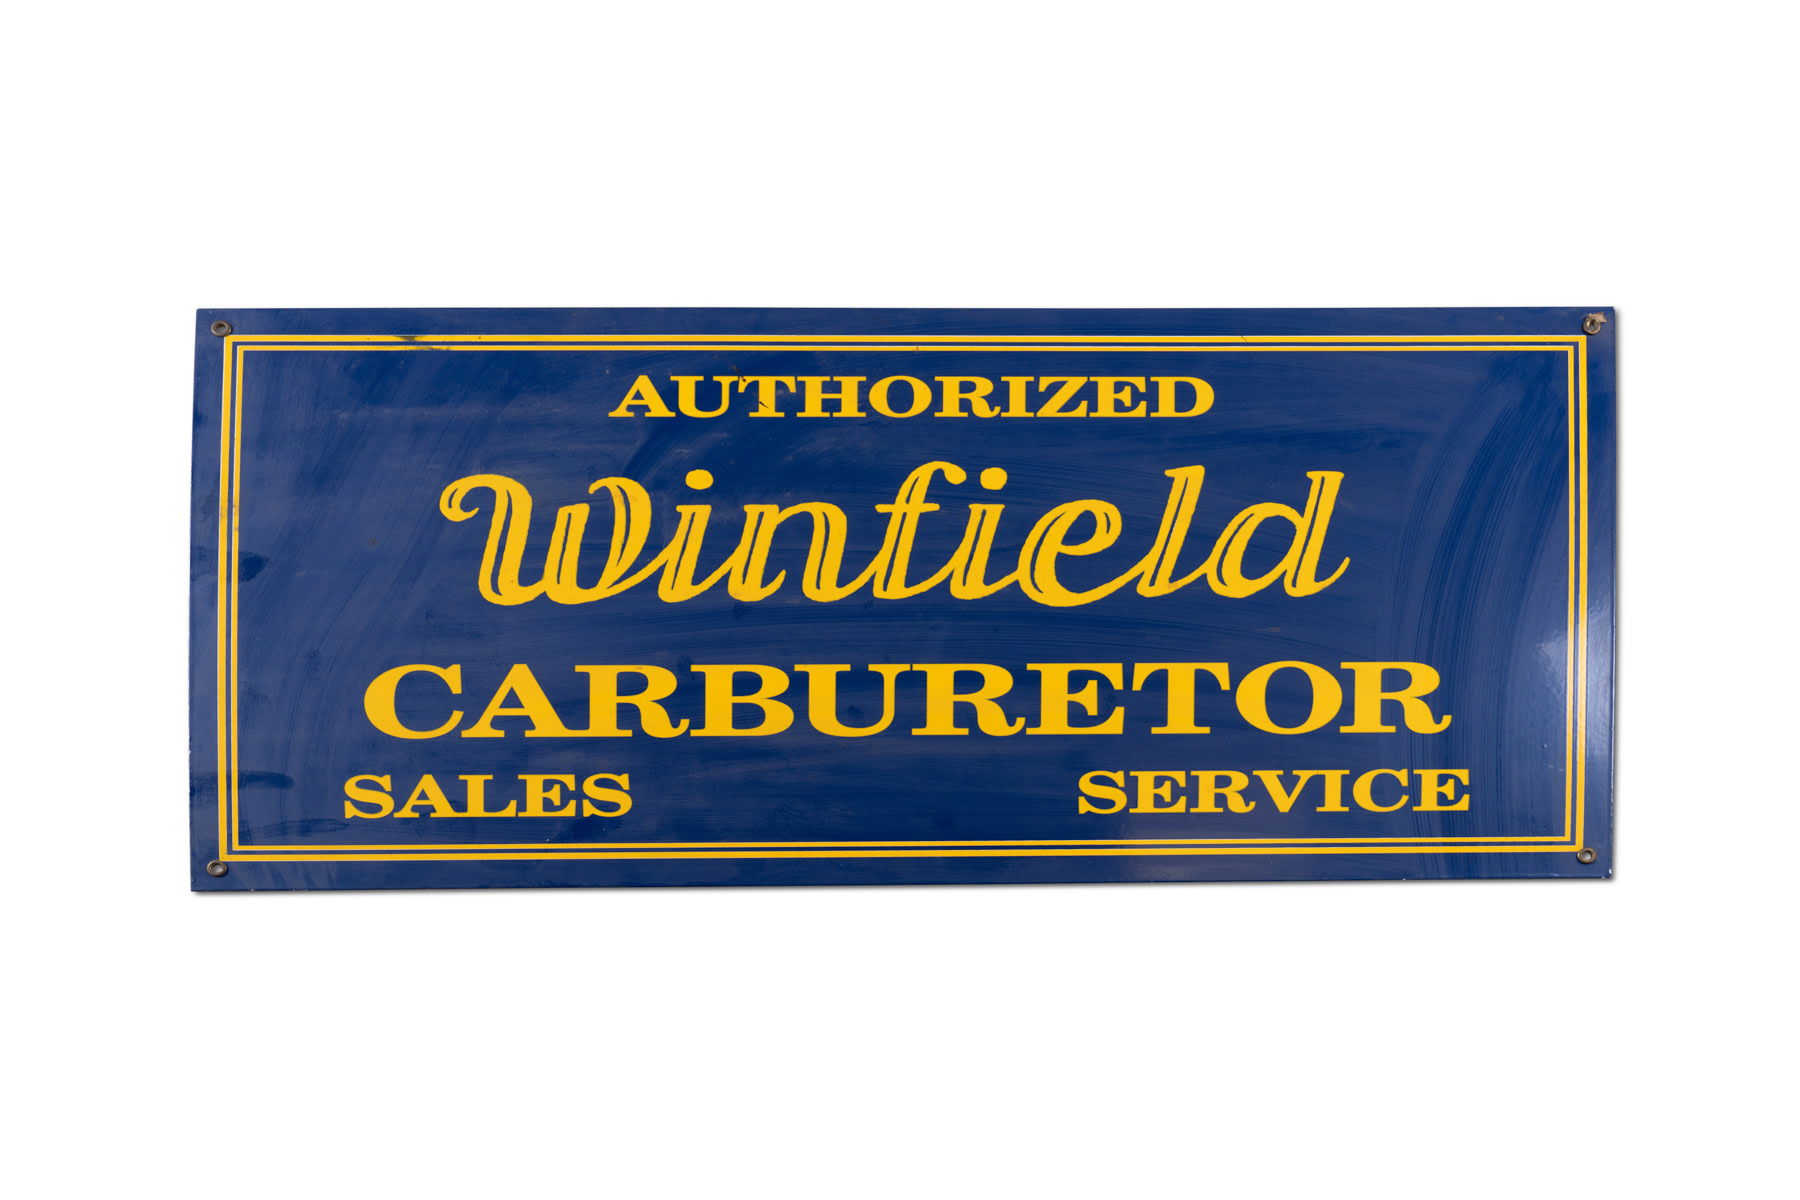 Winfield Carburetor Authorized Sales-Service Sign